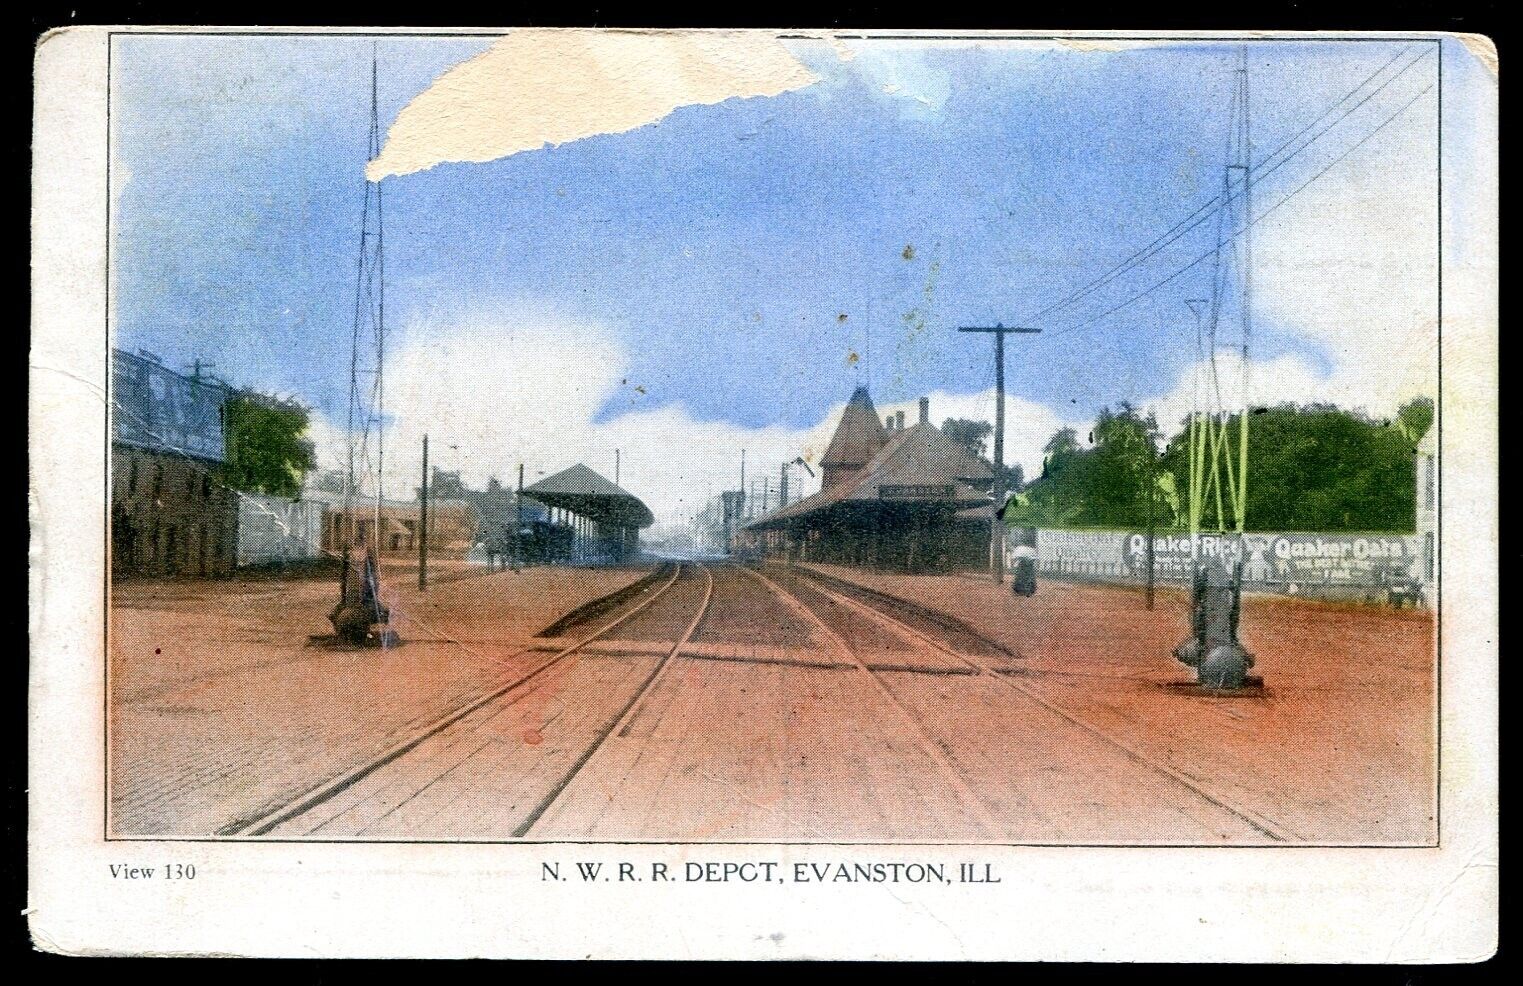 EVANSTON Illinois Postcard 1908 NWRR Depot Train Station